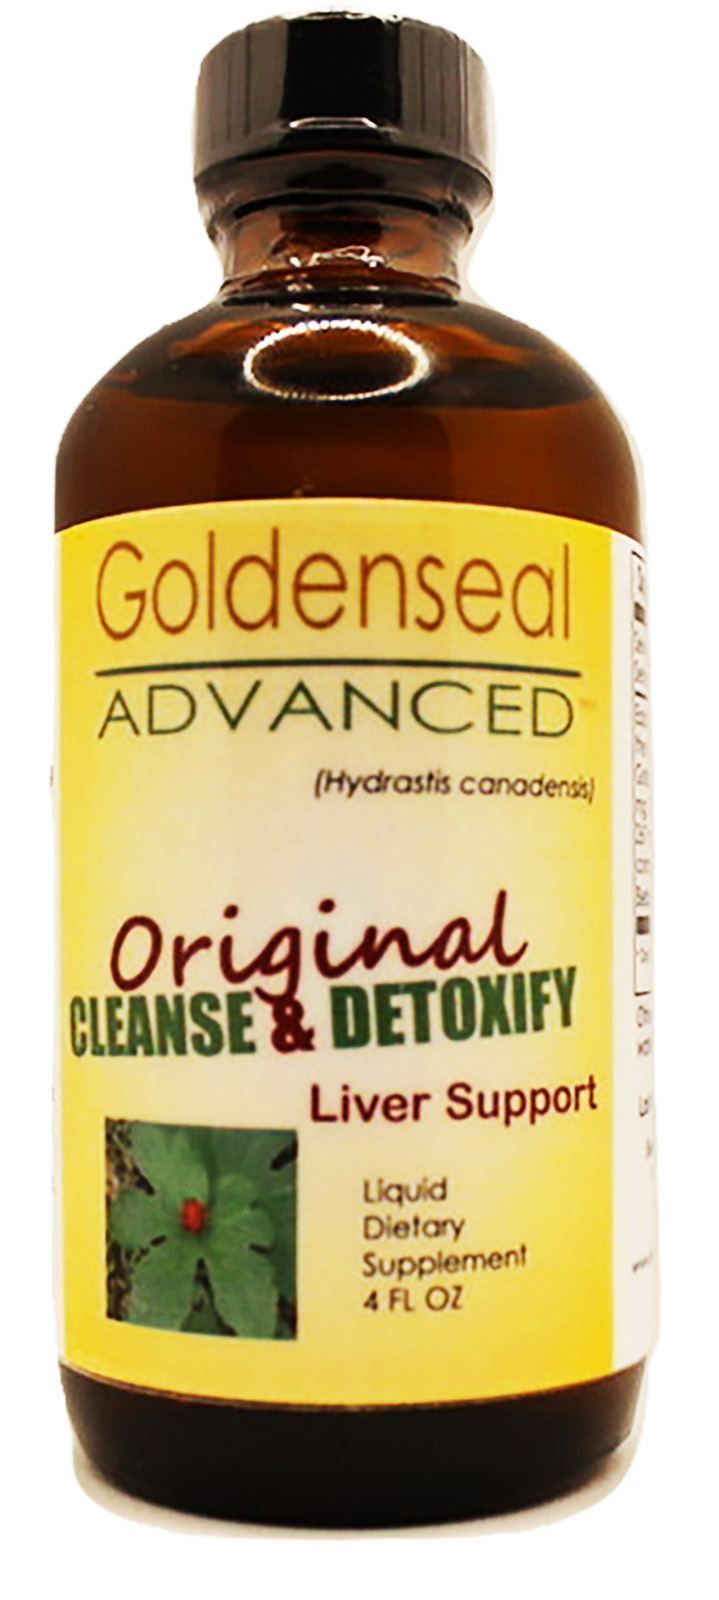 Goldenseal Advanced Cleanse & Detoxify